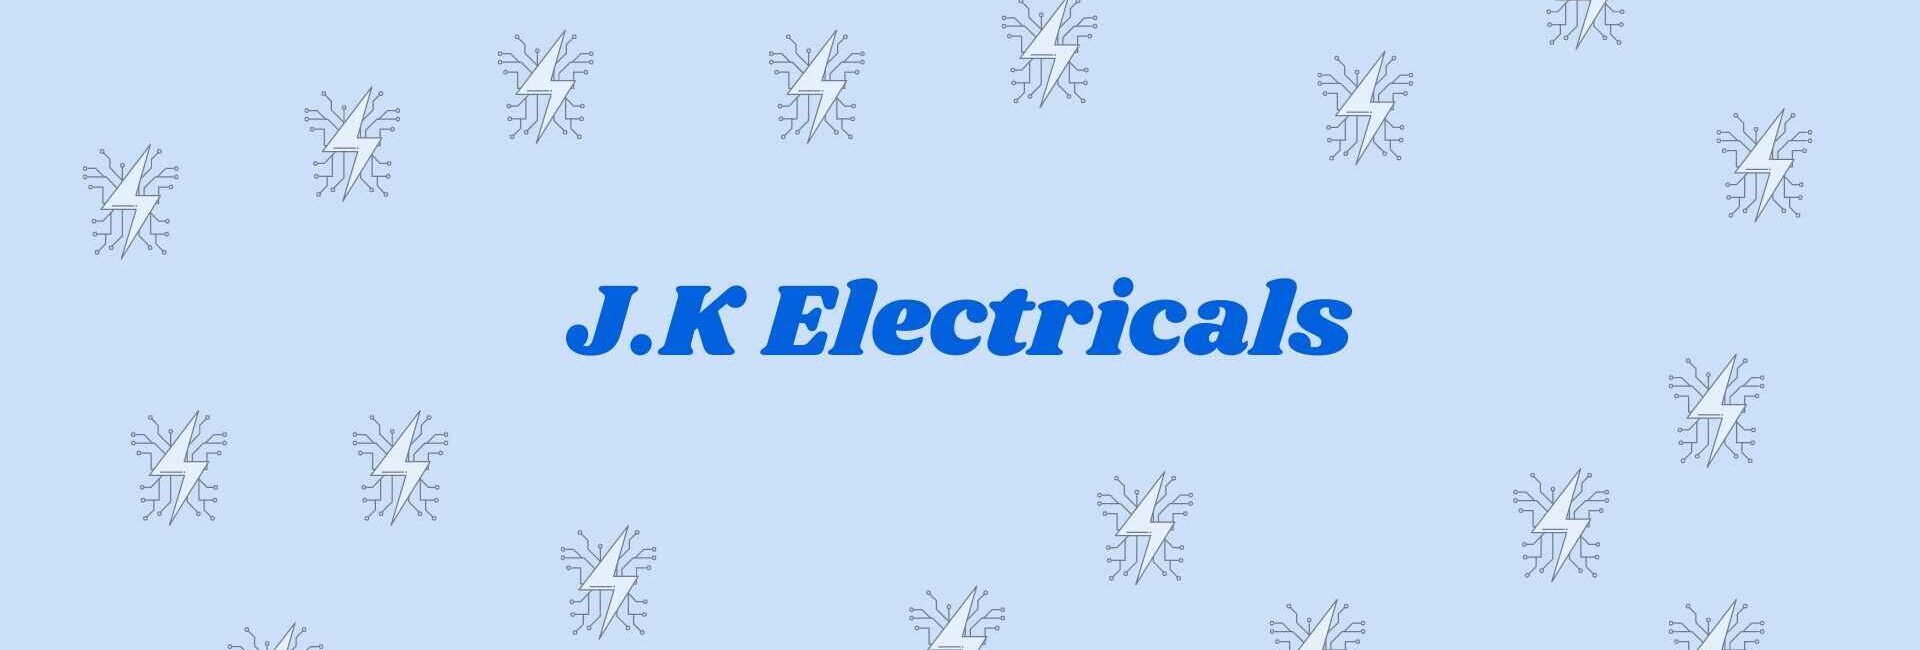 J.K Electricals - Electronics Goods Dealer in Noida